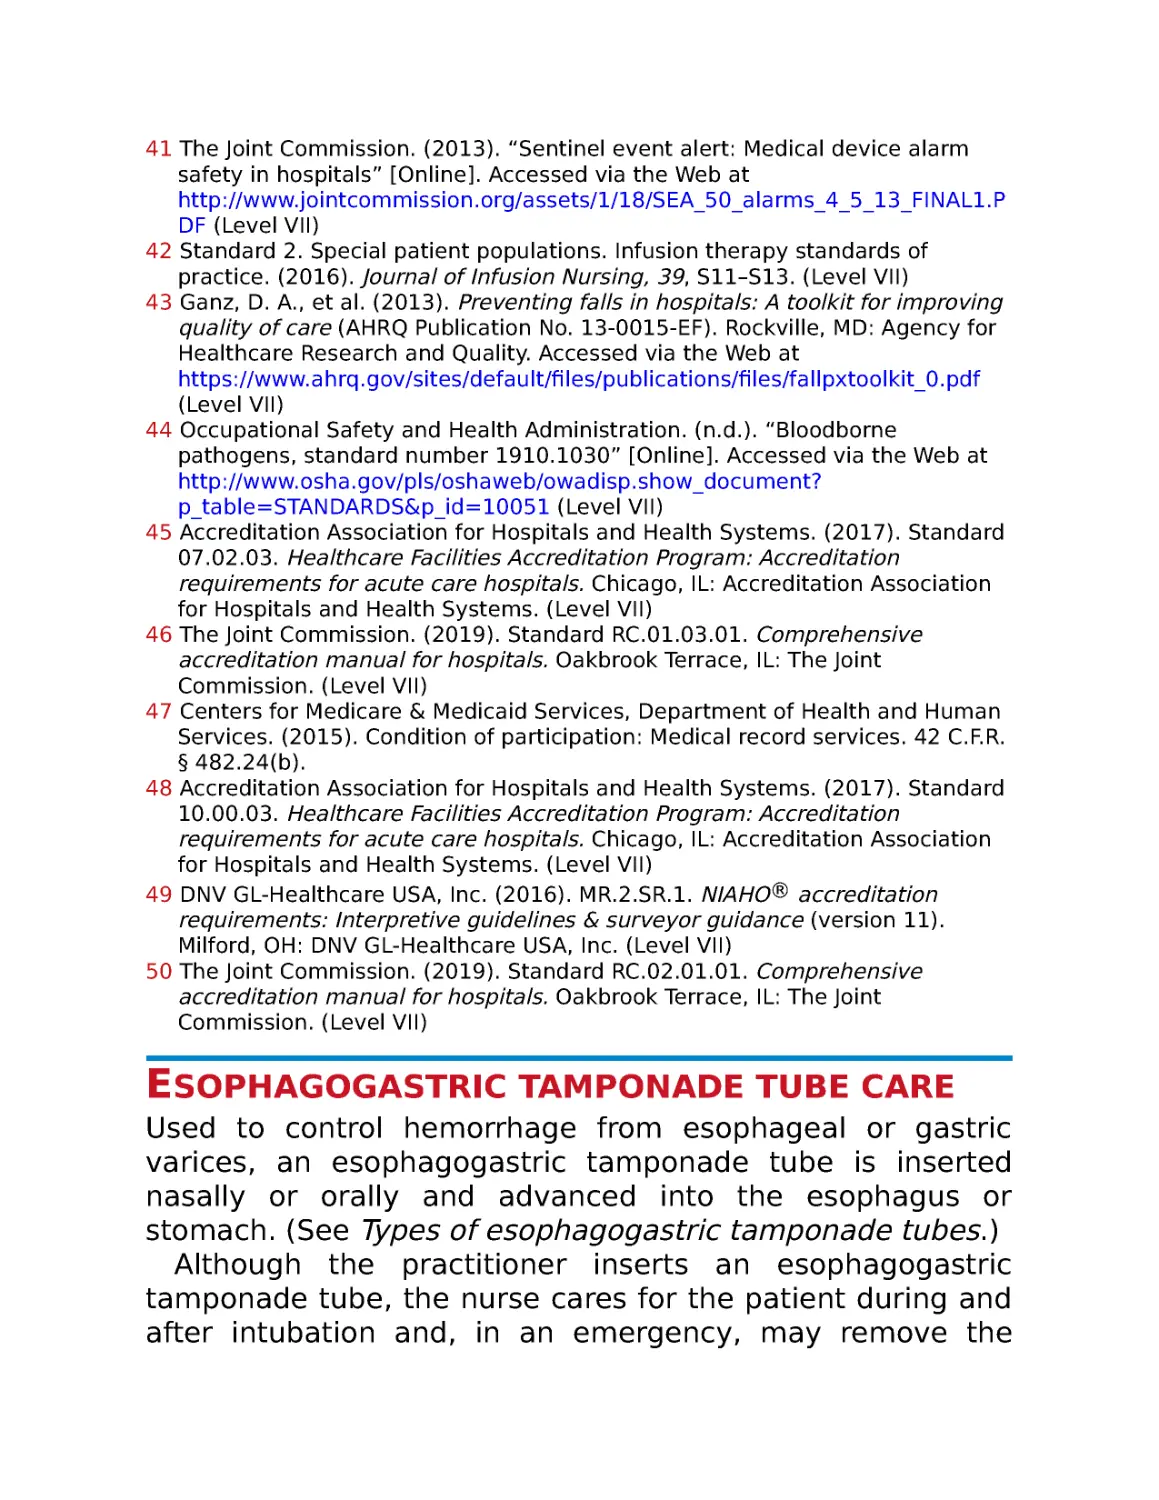 Esophagogastric tamponade tube care